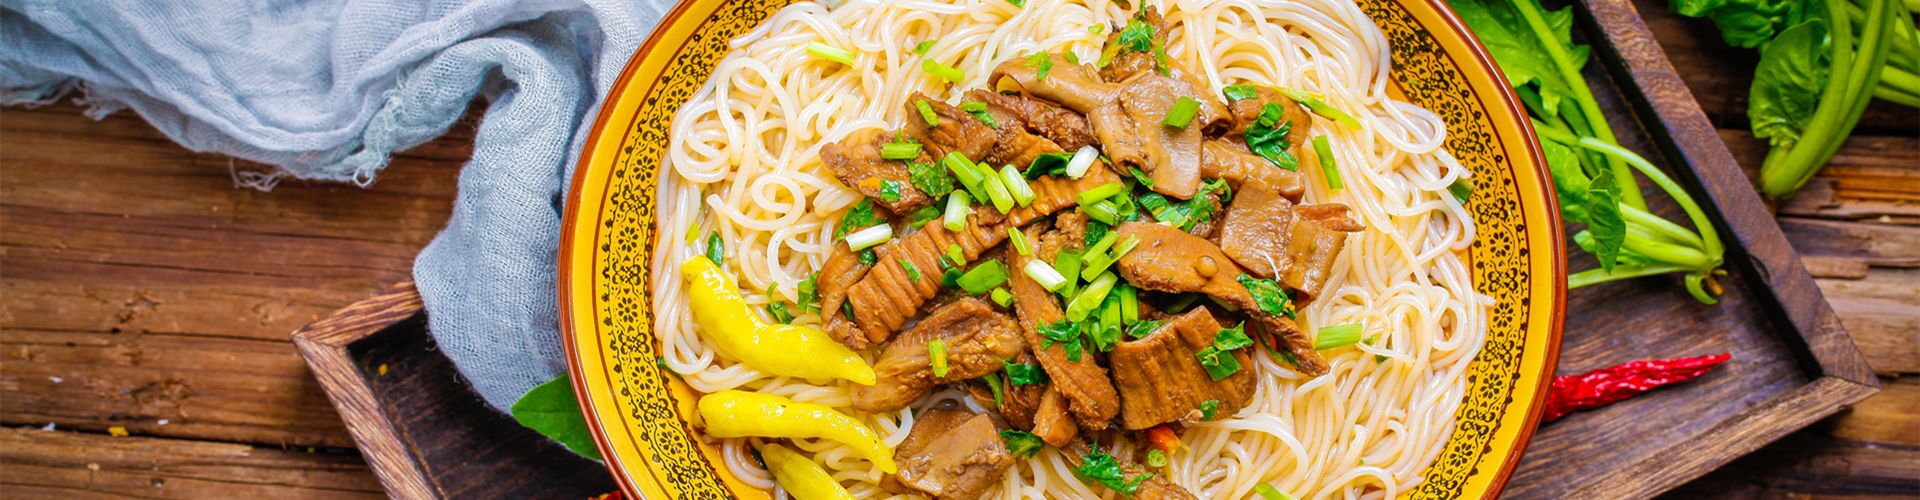 Top 10 Famous Local Foods and Restaurants in Kunming